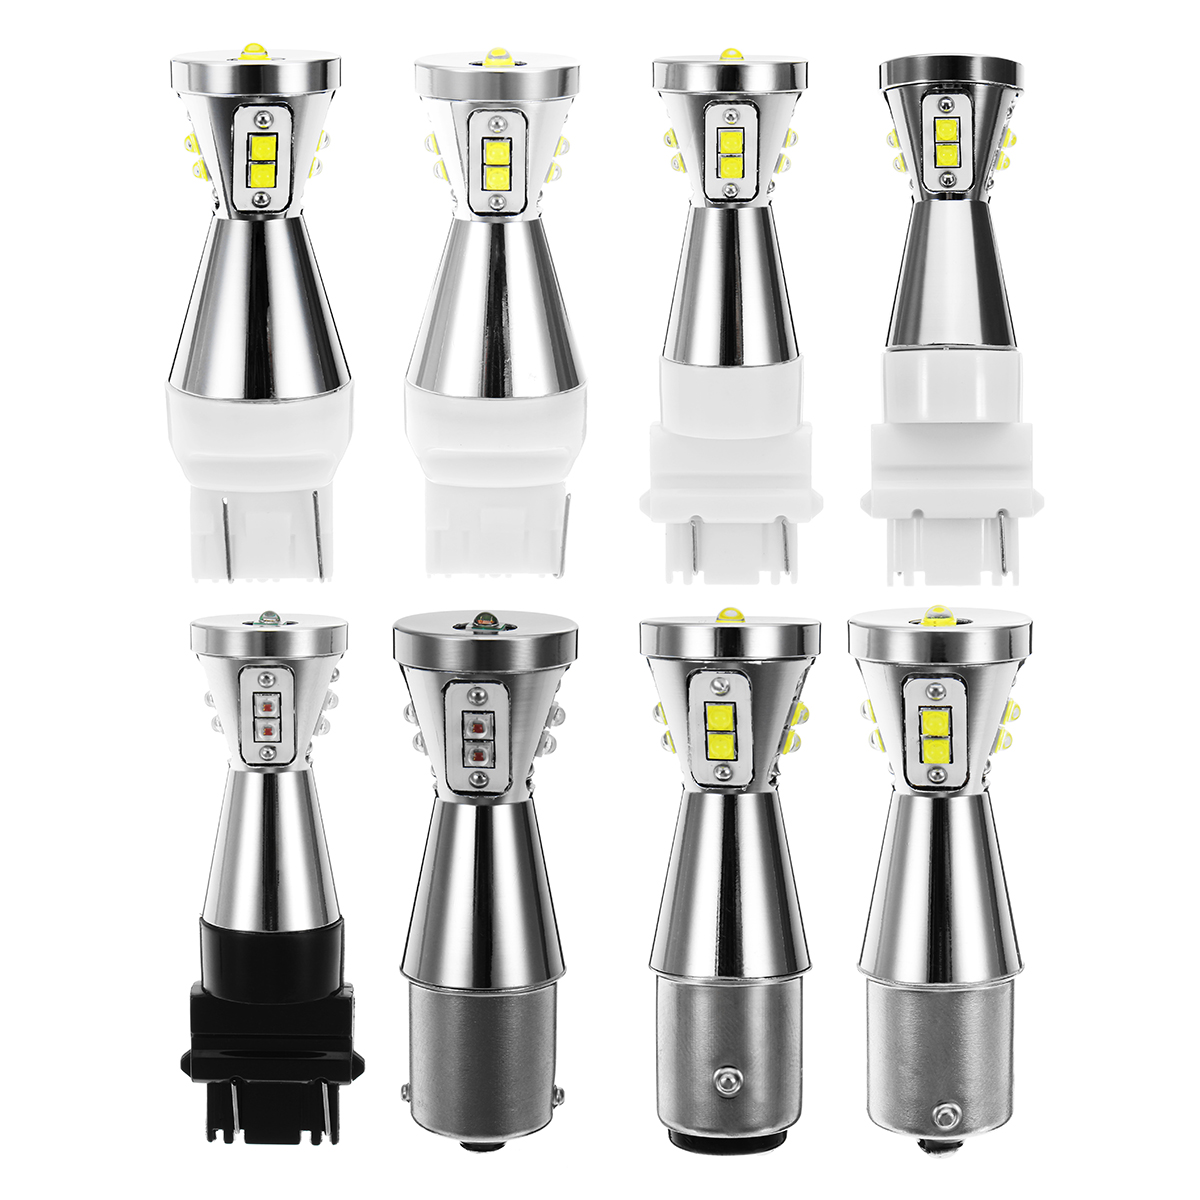 

Universal 2Pcs Autoleader Car Tail Brake DRL Fog Lights Turn Signal Lamps Bulbs 3157 1156 3156 7443 7440 1157 For RV Cam